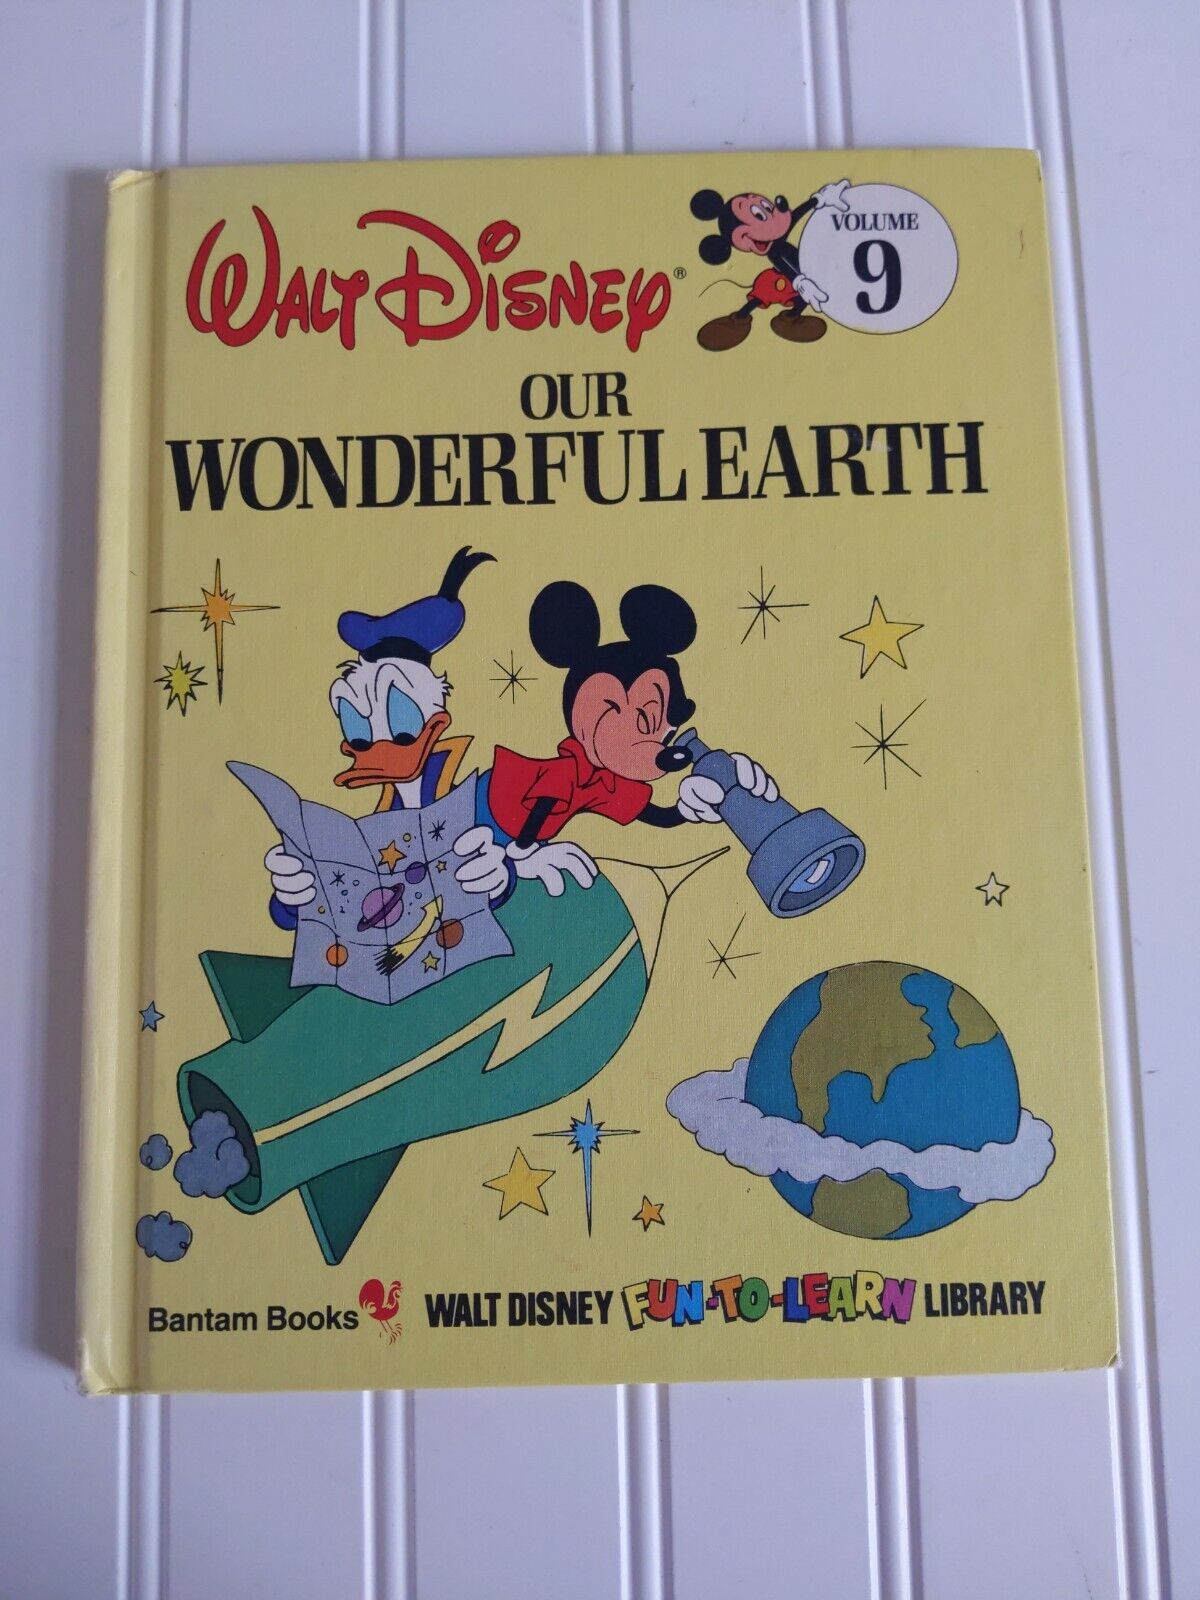 Walt Disney Bantam book - Our wonderful earth (Volume 9)(1984)